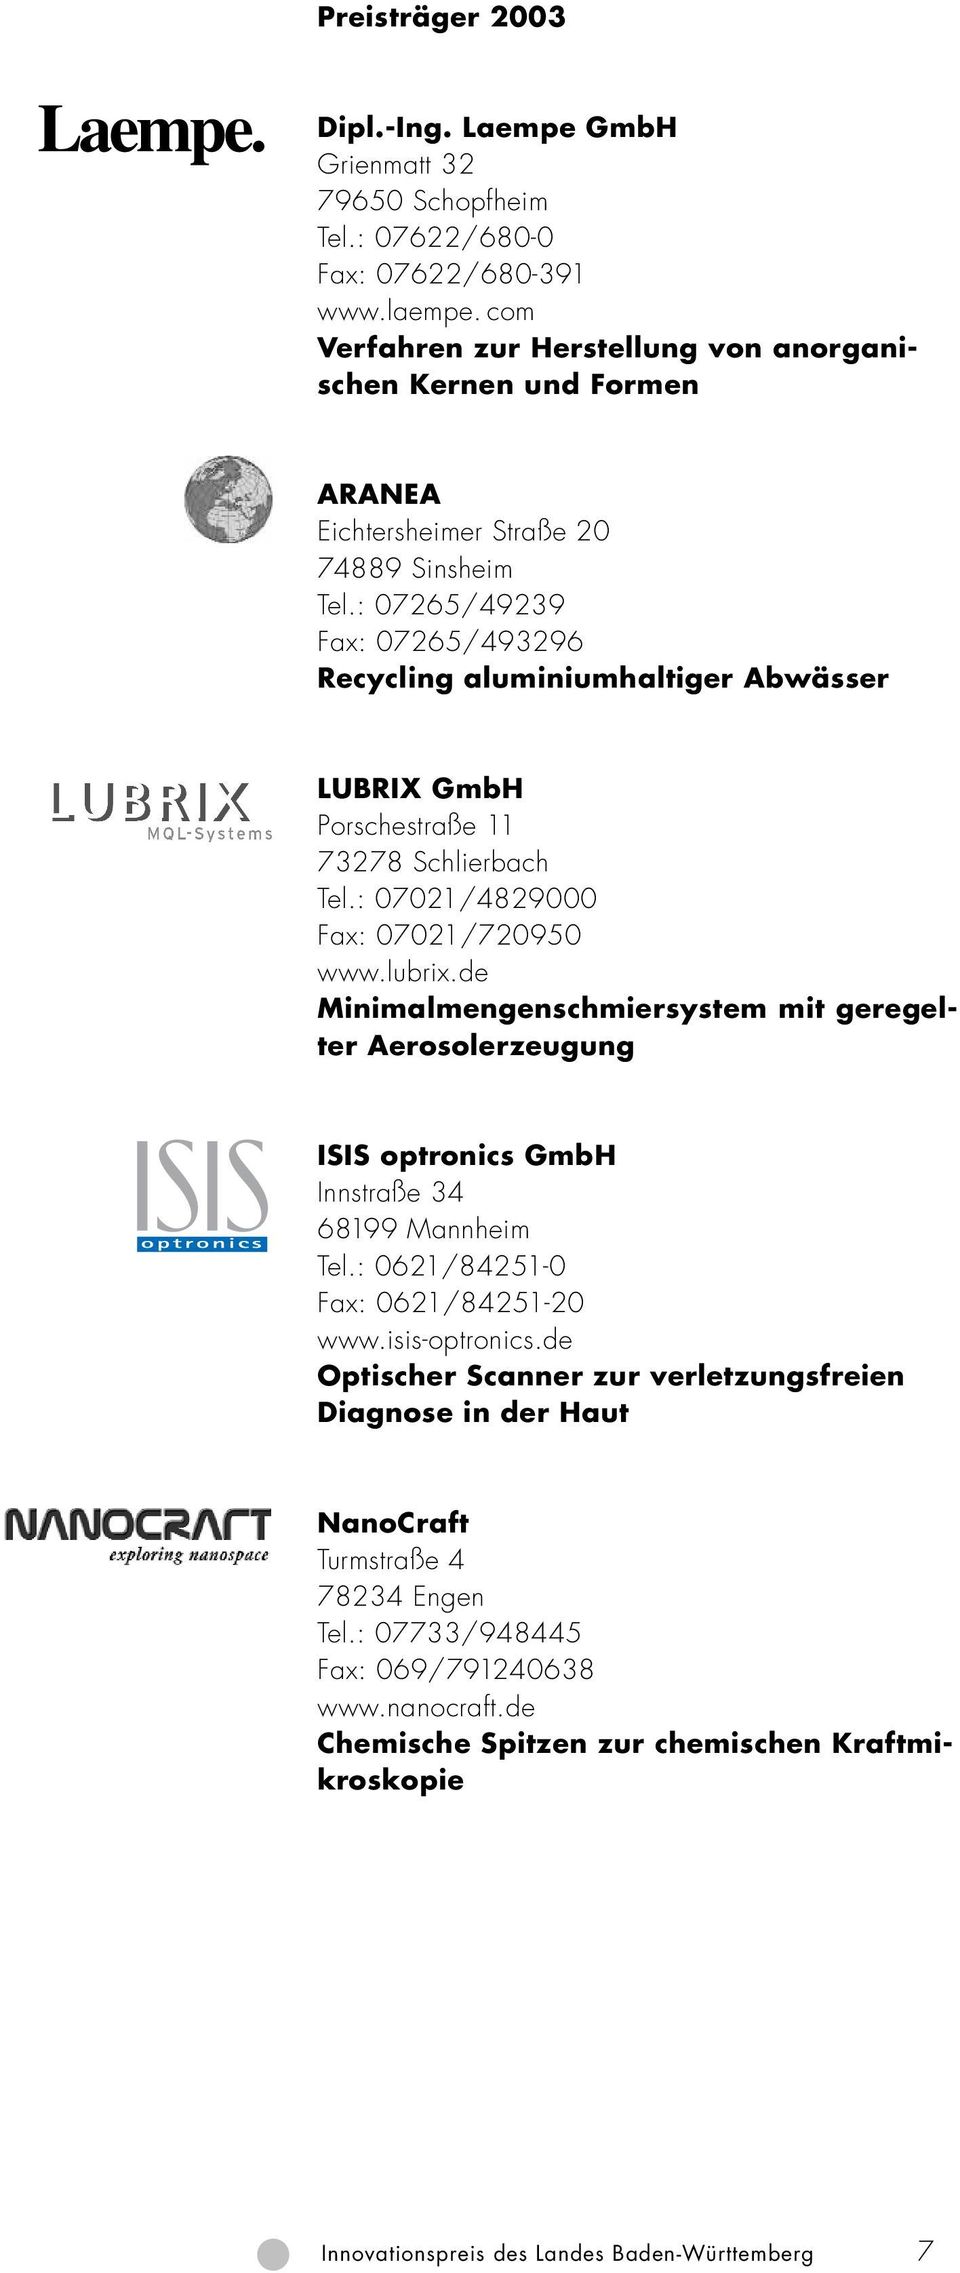 : 07265/49239 Fax: 07265/493296 Recycling aluminiumhaltiger Abwässer LUBRIX GmbH Porschestraße 11 73278 Schlierbach Tel.: 07021/4829000 Fax: 07021/720950 www.lubrix.